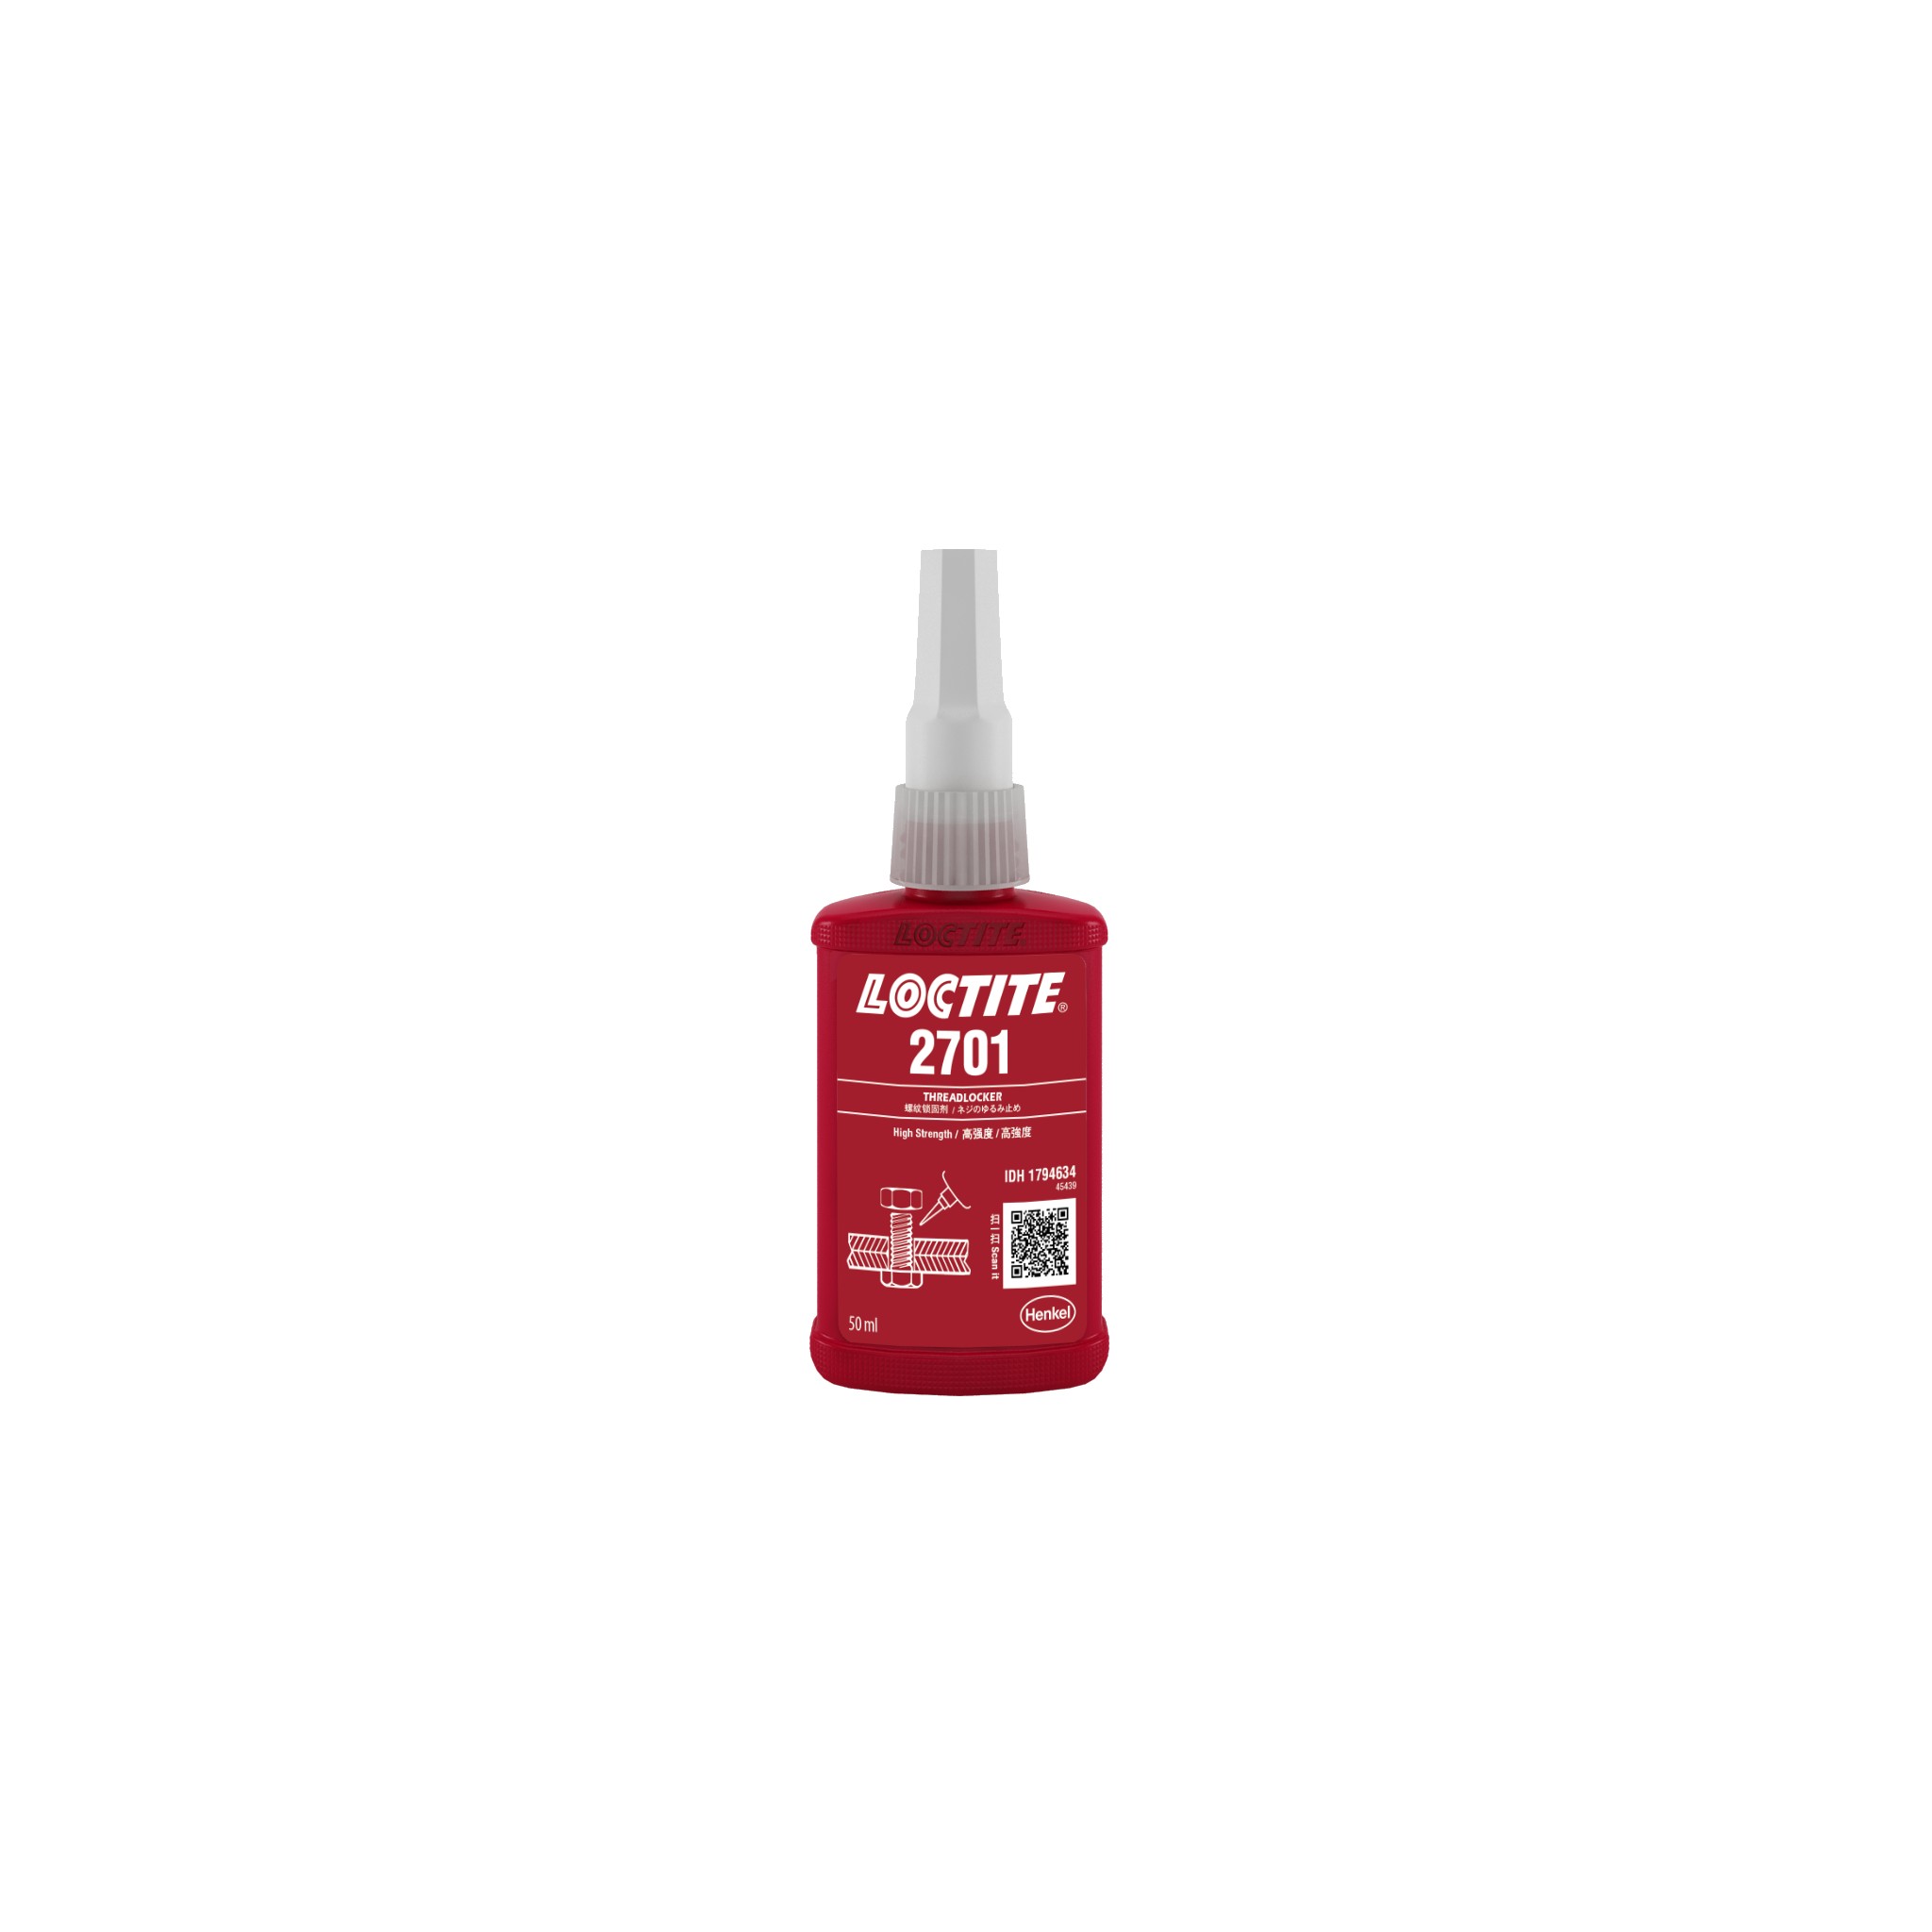 LOCTITE 2701 -ねじゆるみ止め用接着剤 - 高強度 - ヘンケルの接着剤